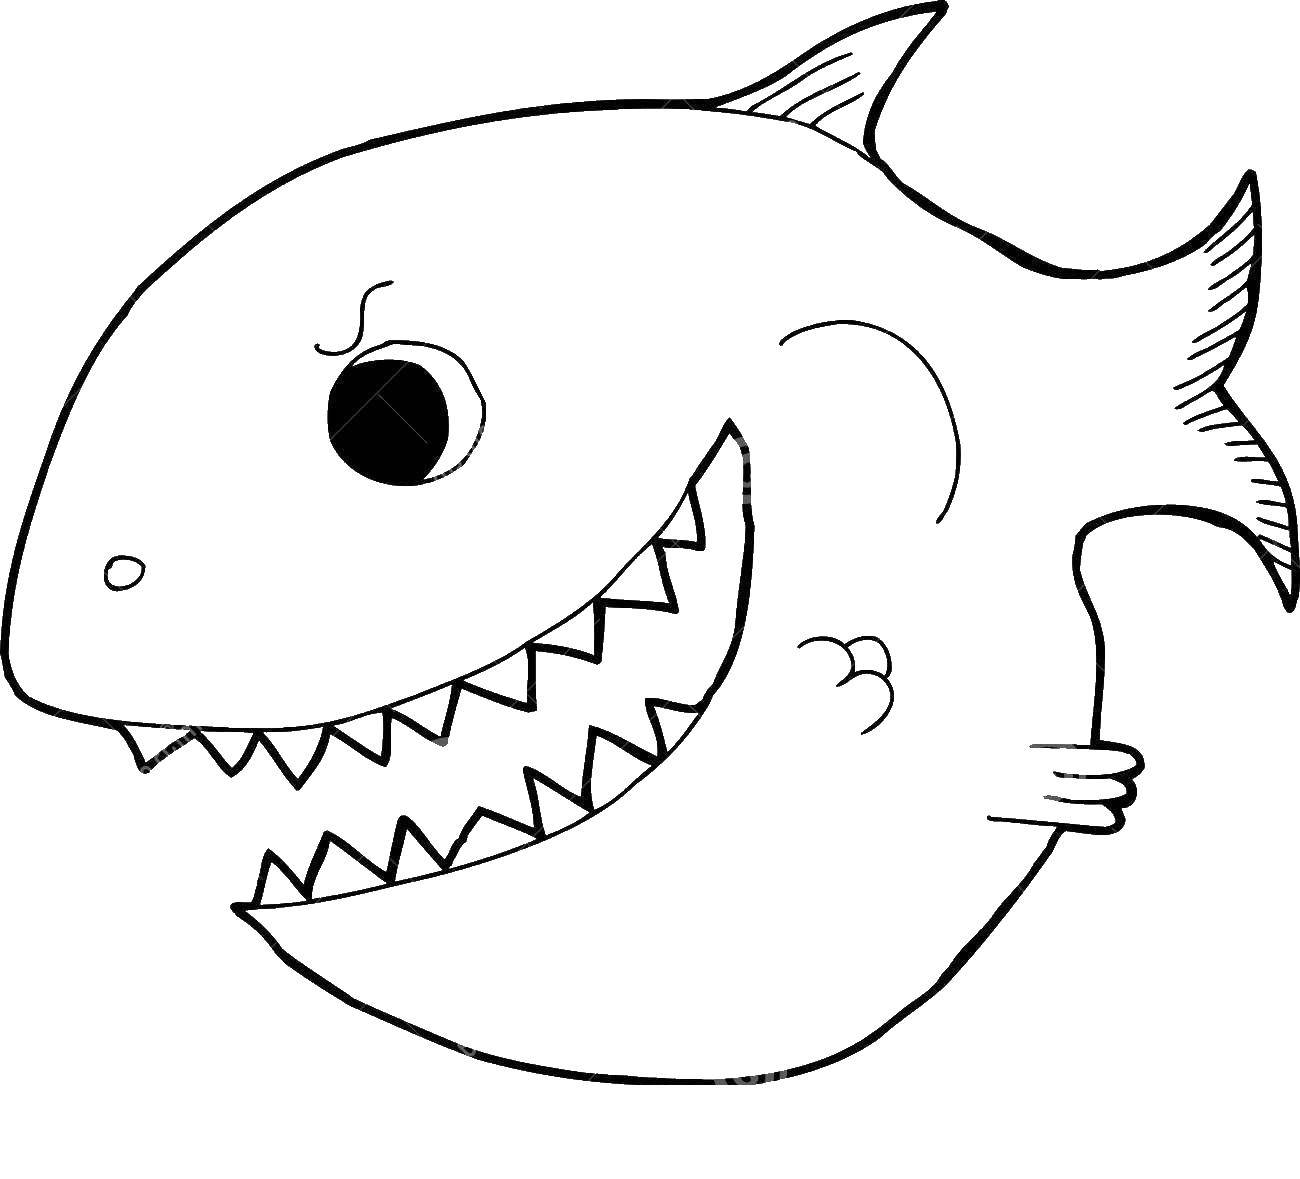 Coloring Piranha. Category Contours of fish. Tags:  piranha.